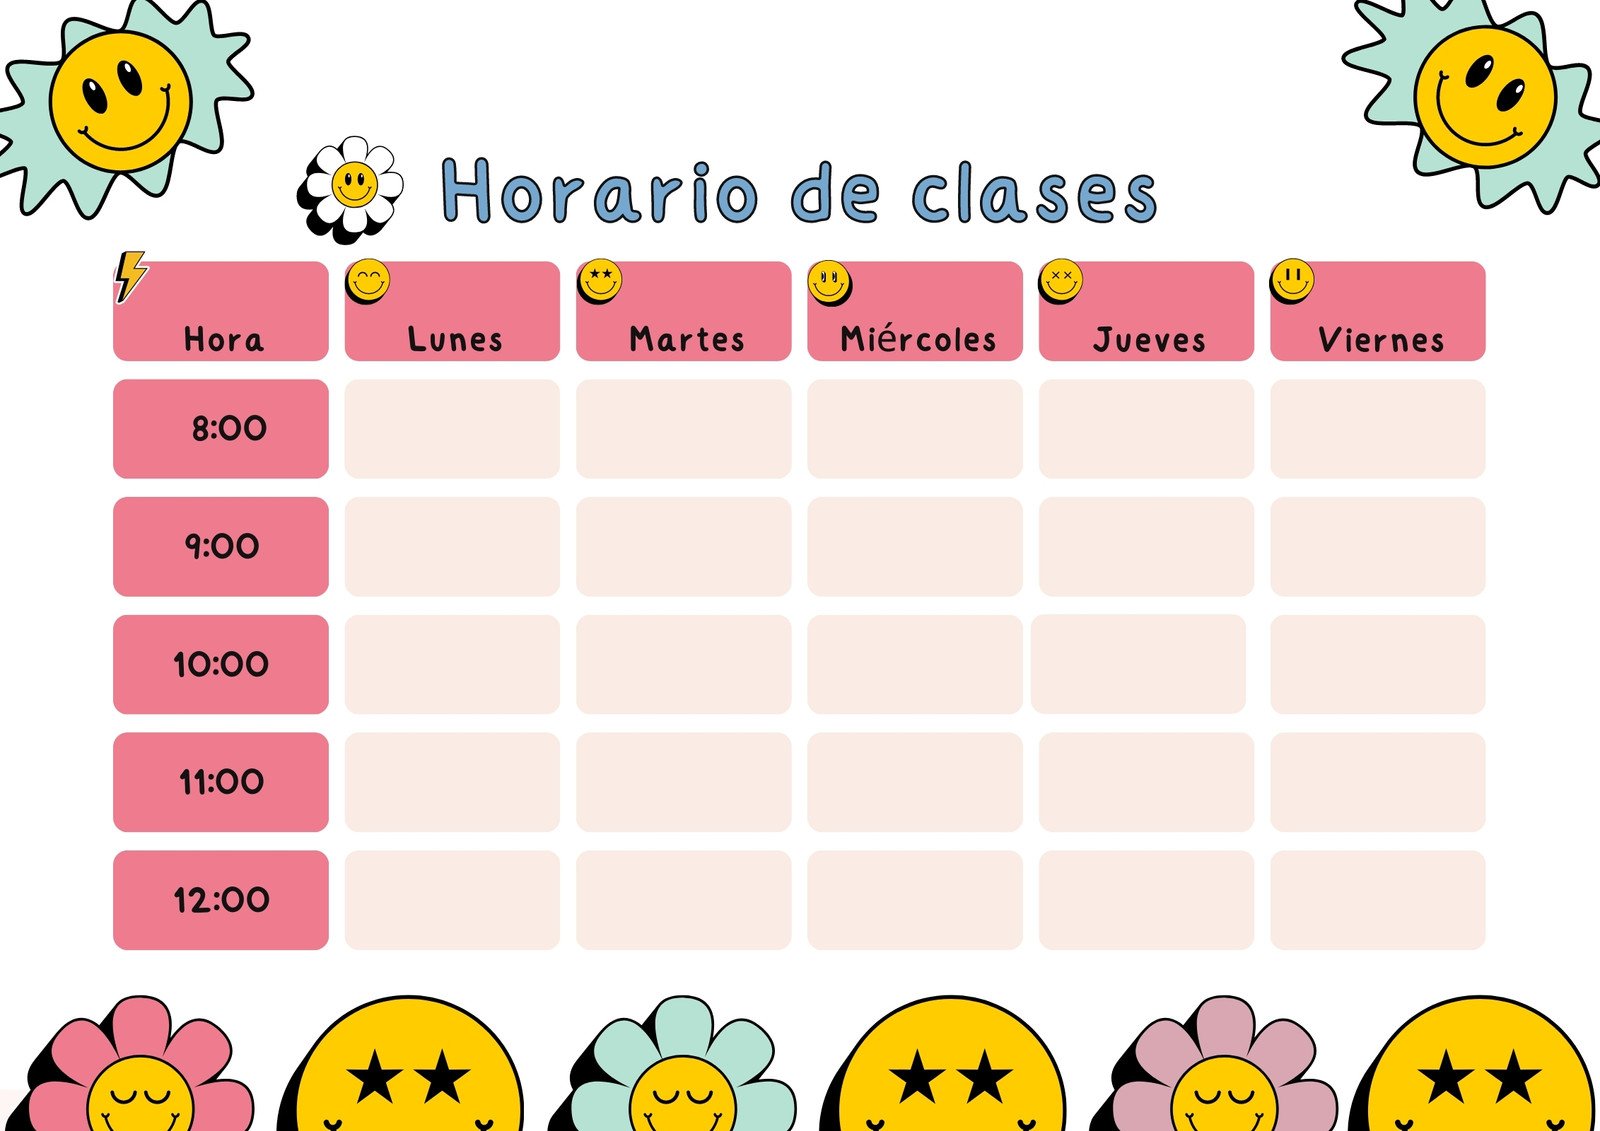 Horario de clases caritas emojis rosa